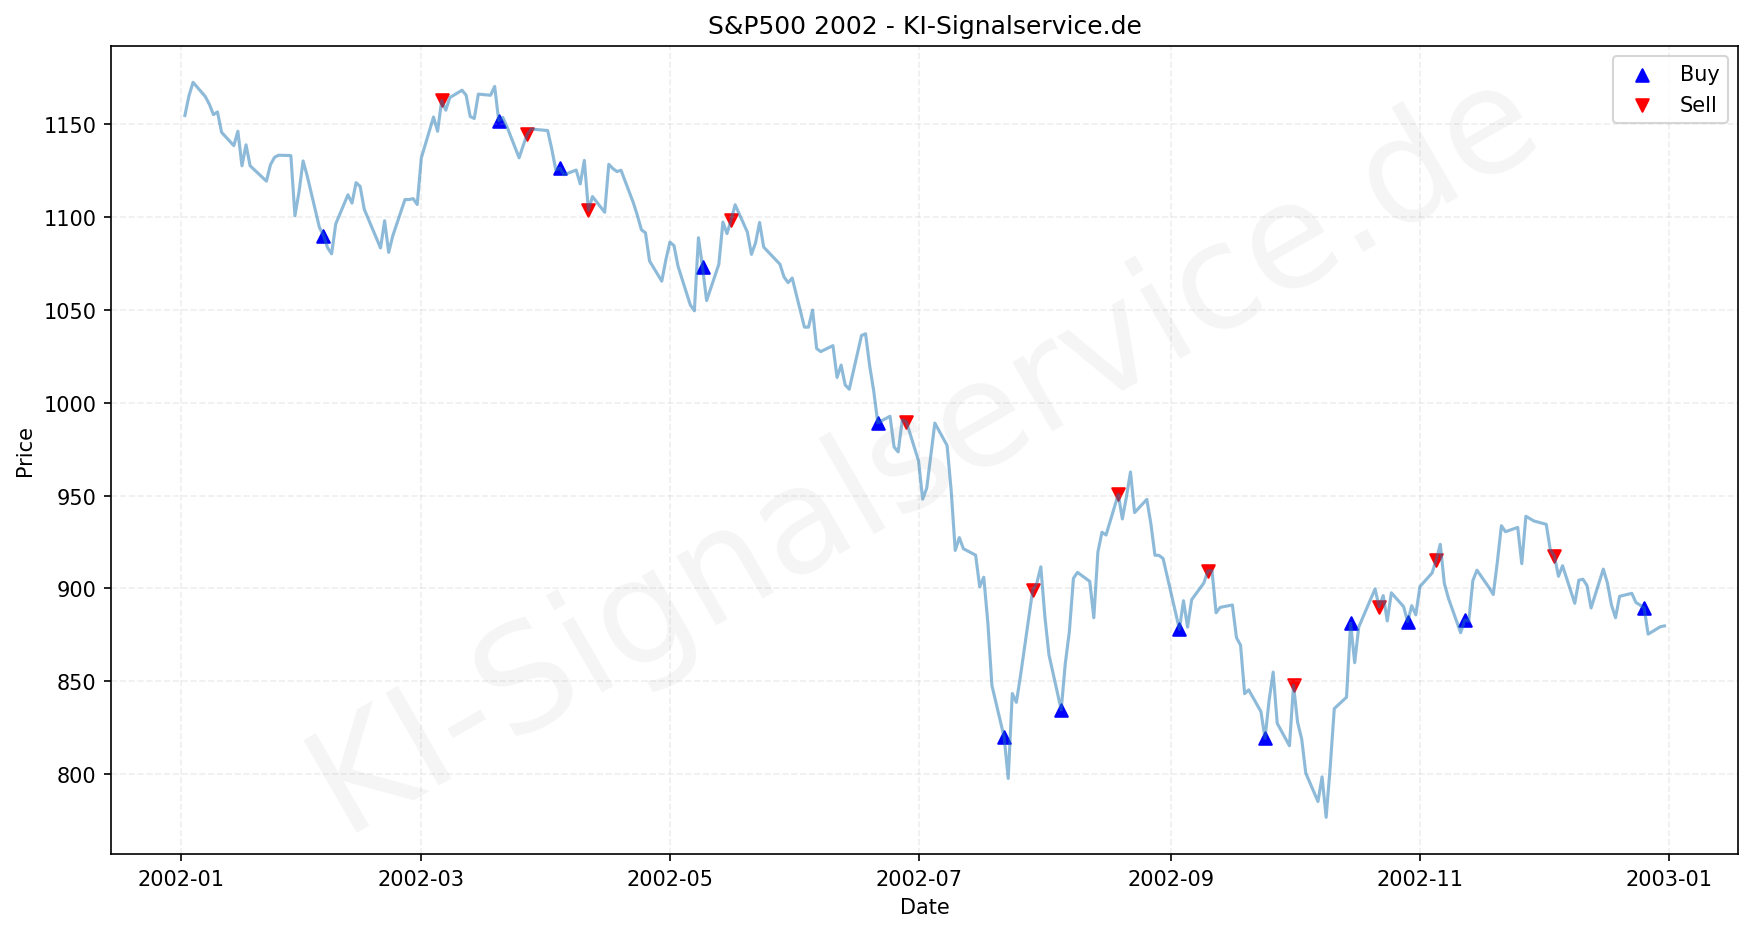 SP500 Index Performance Chart - KI Tradingsignale 2002